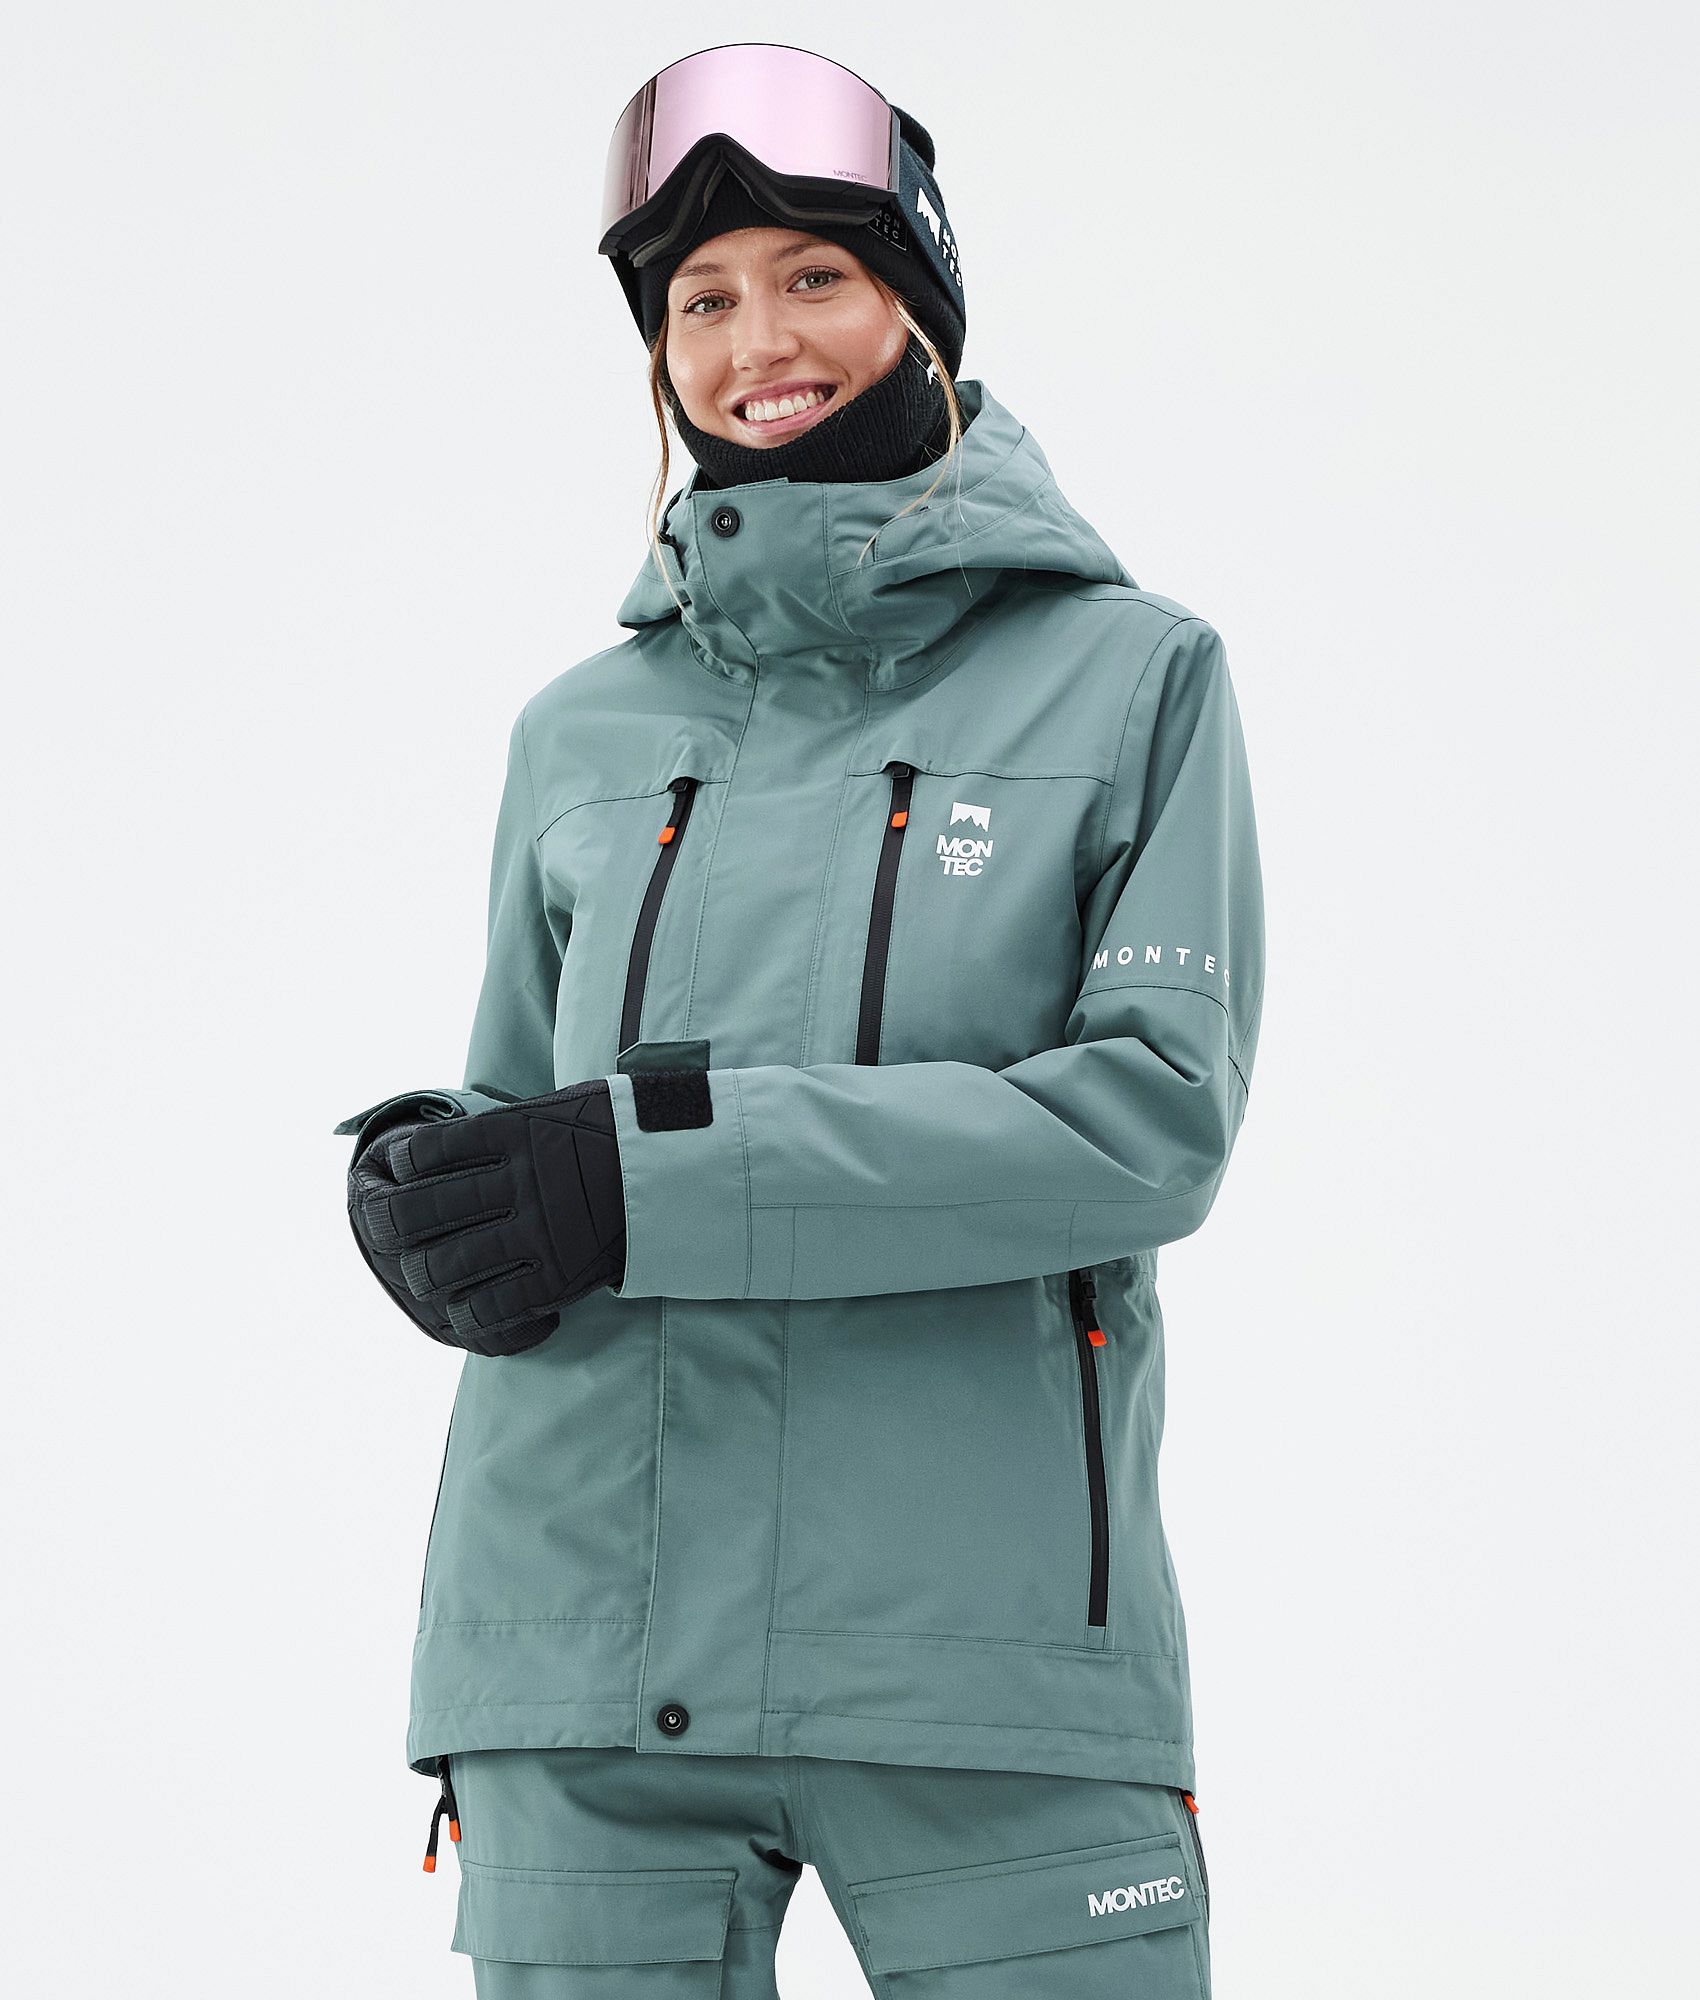 Wantdo Waterproof Snow Jacket - Women's Review | Tested by GearLab